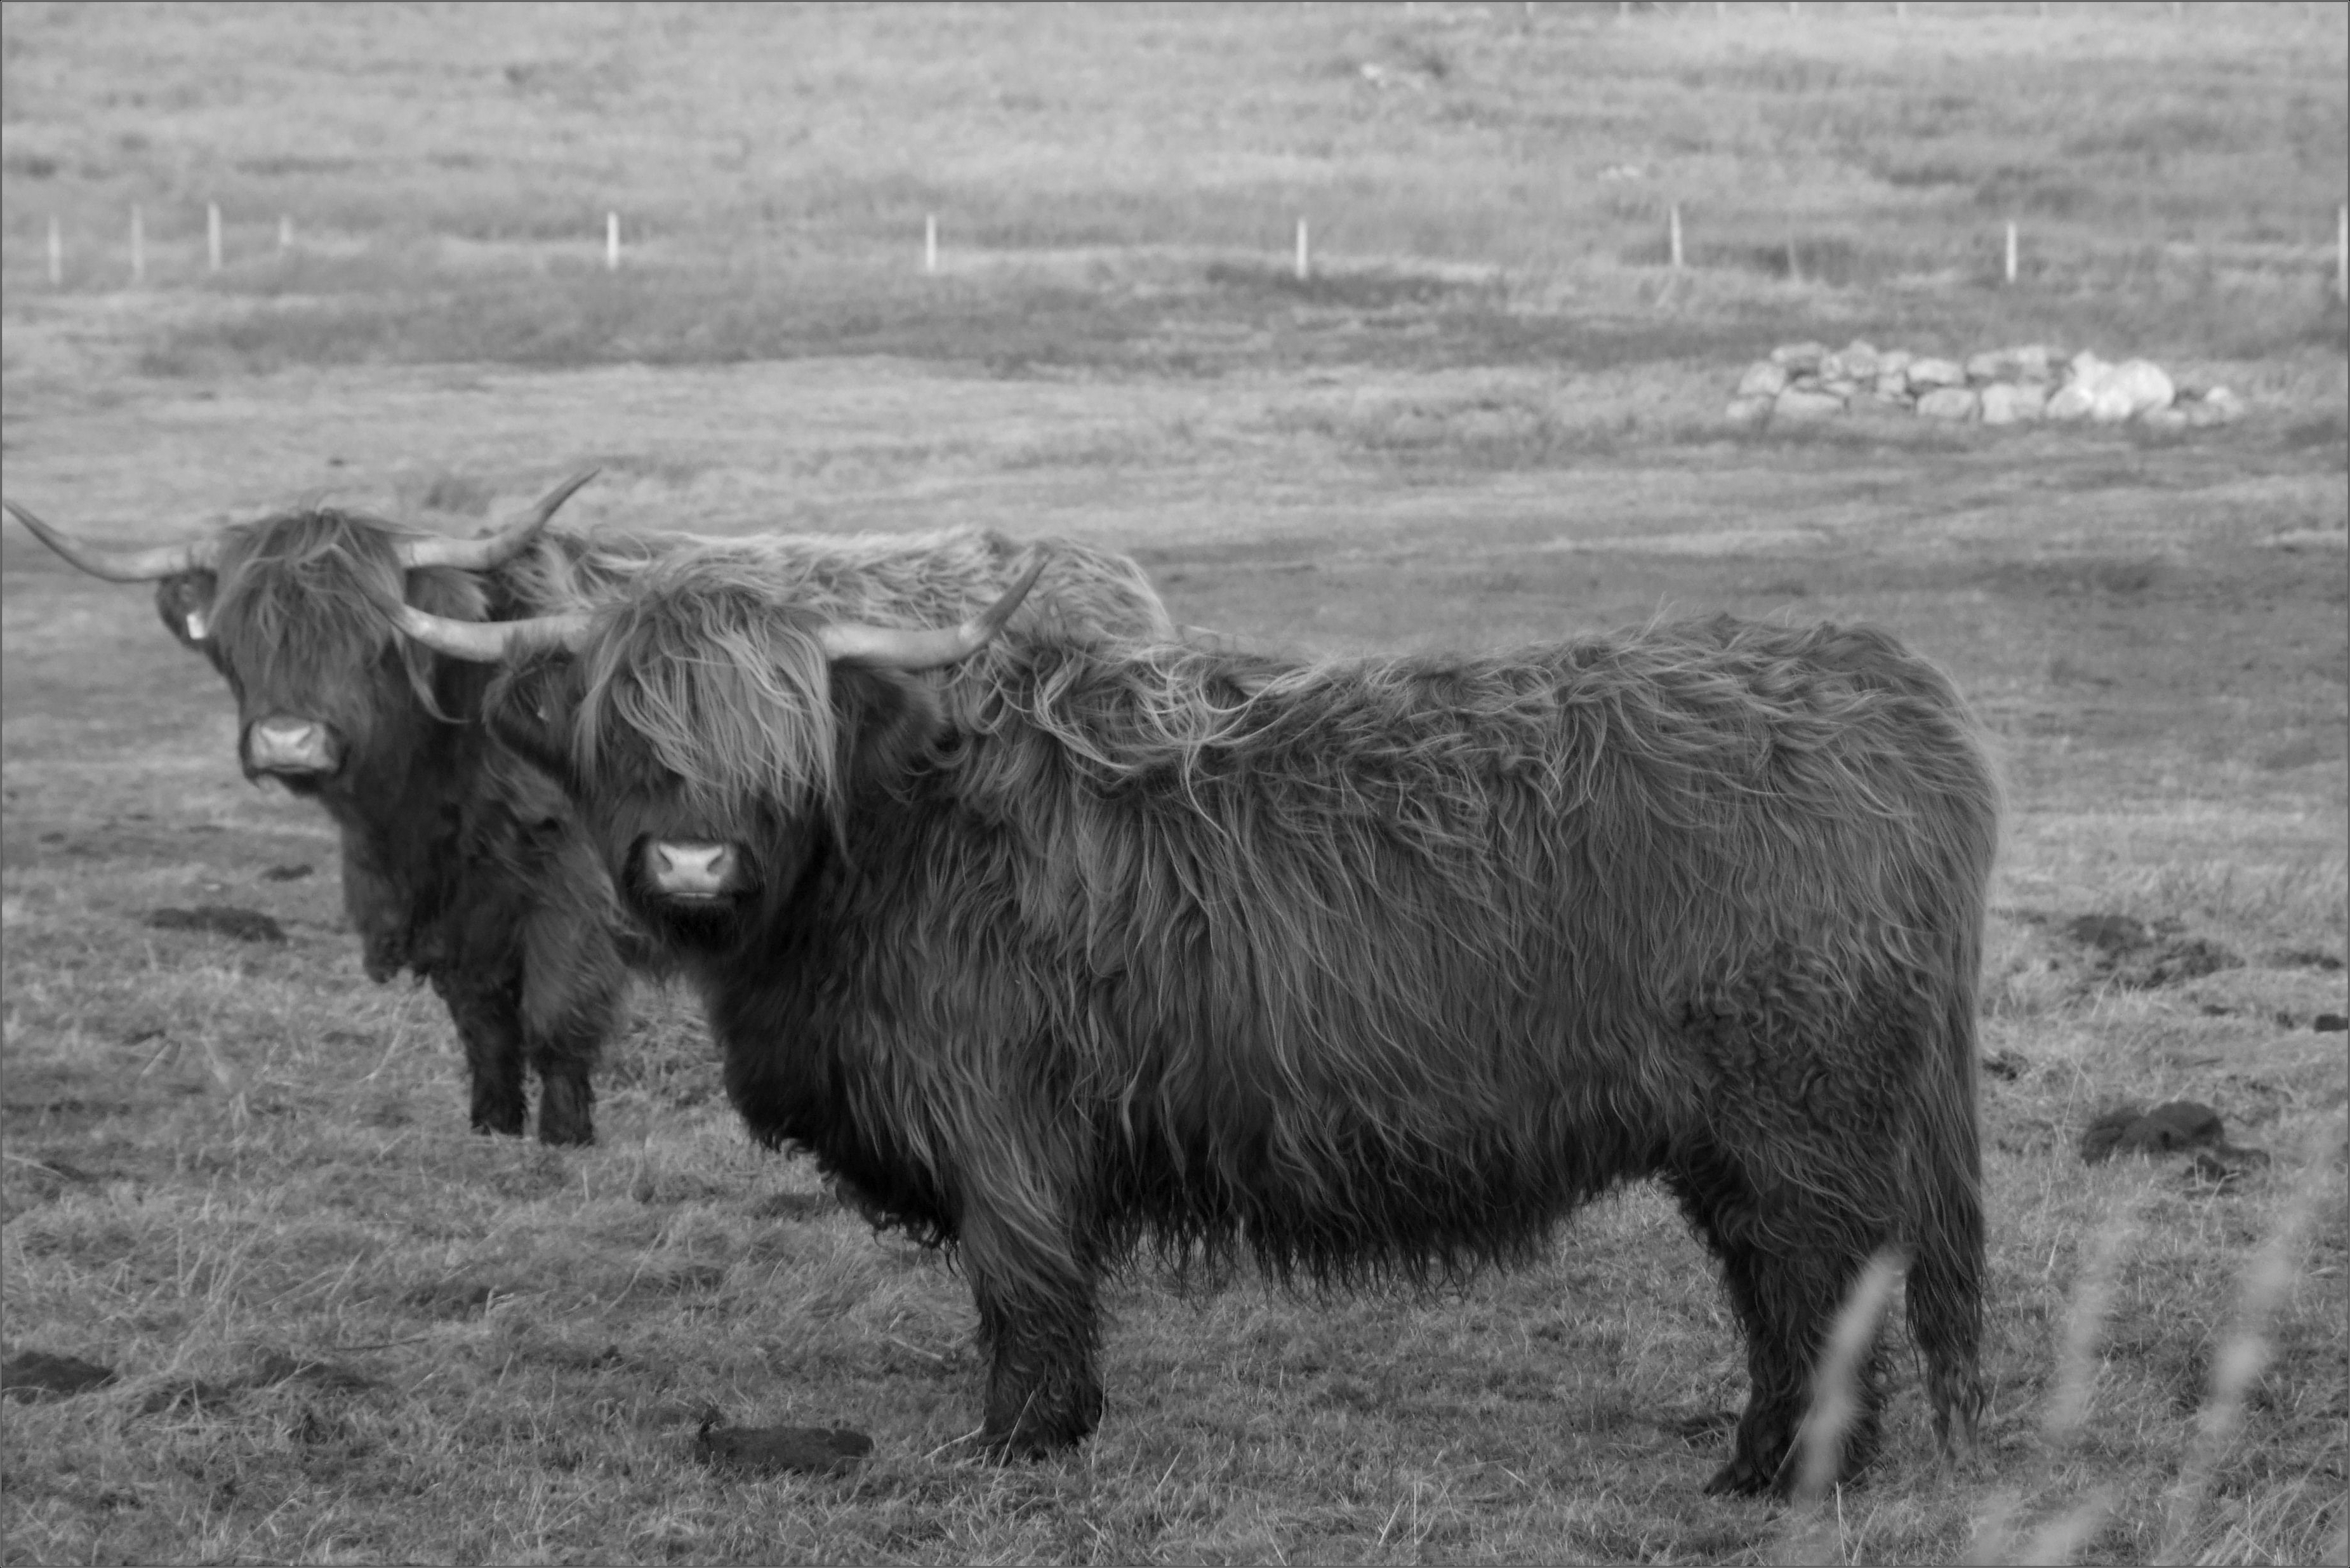 Photograph: Highland Cattle